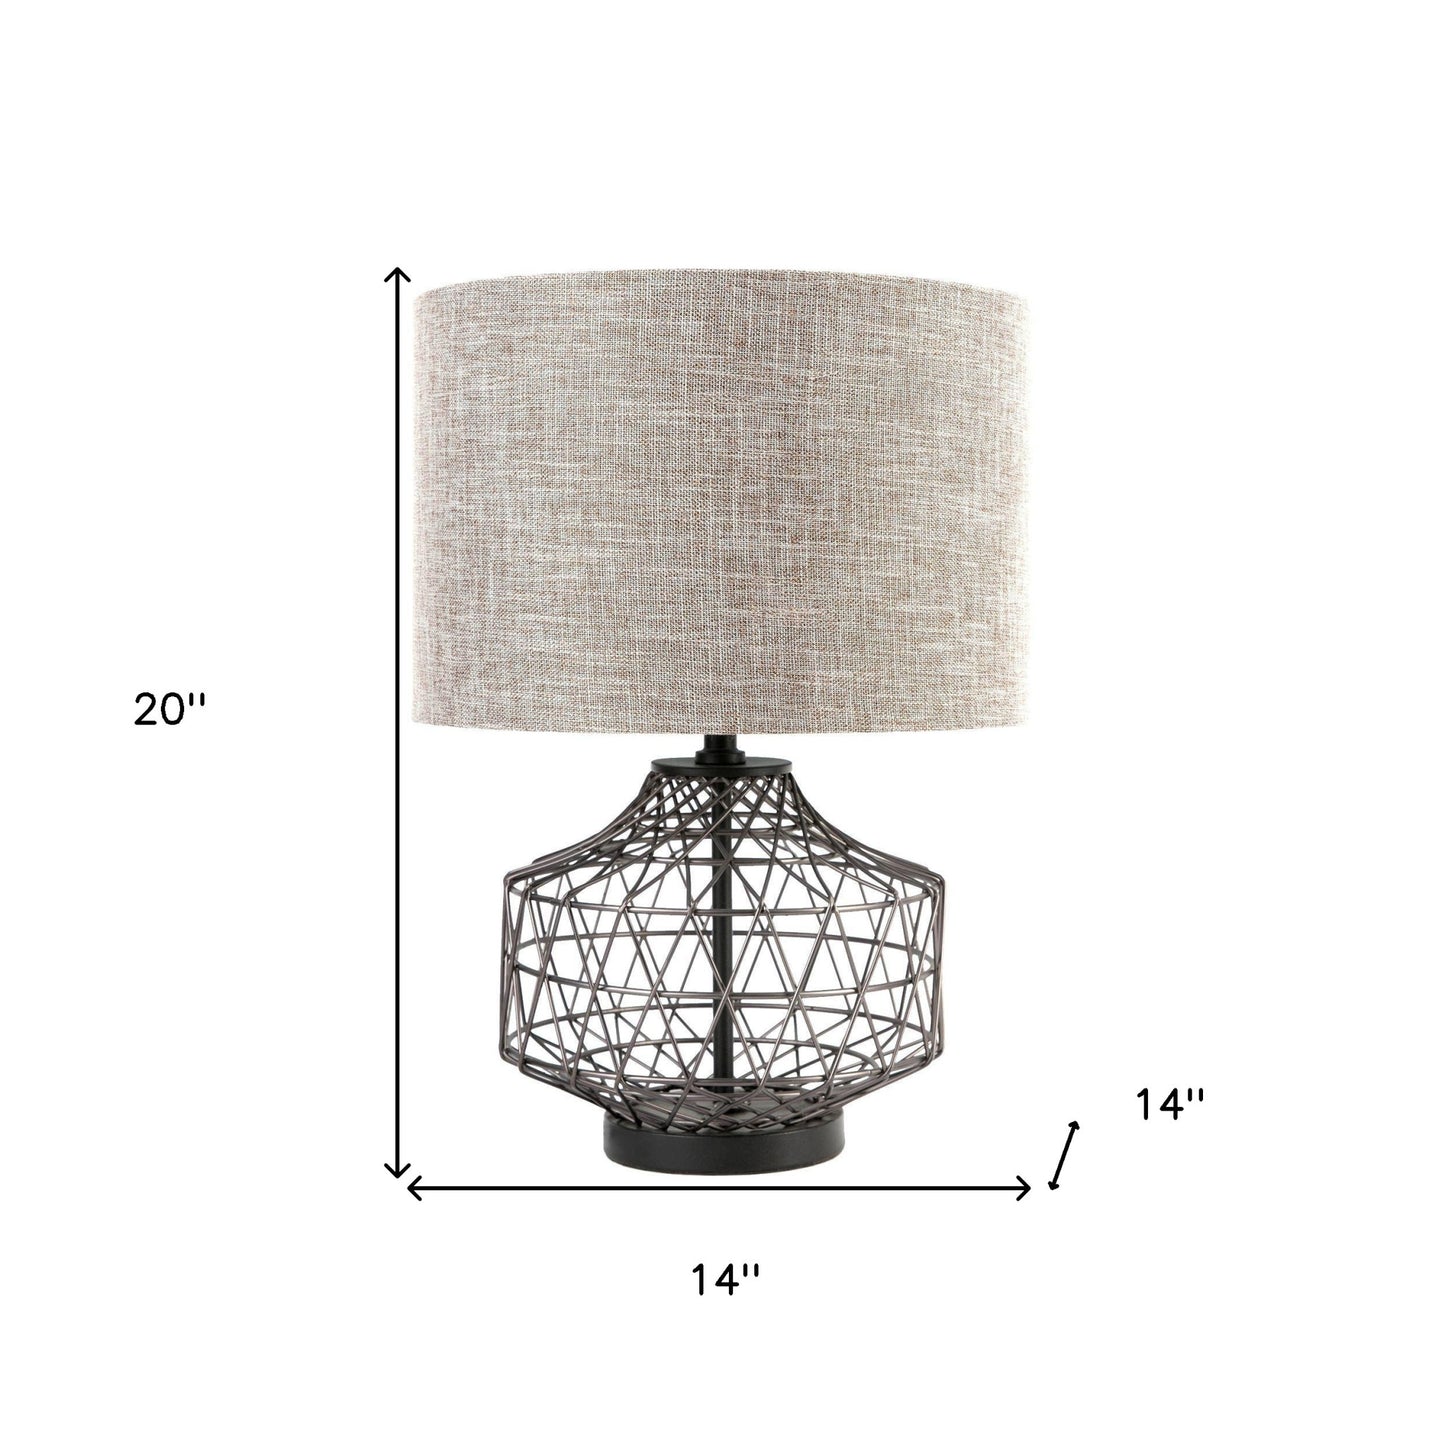 Gray Metal Basket Design Table Or Desk Lamp